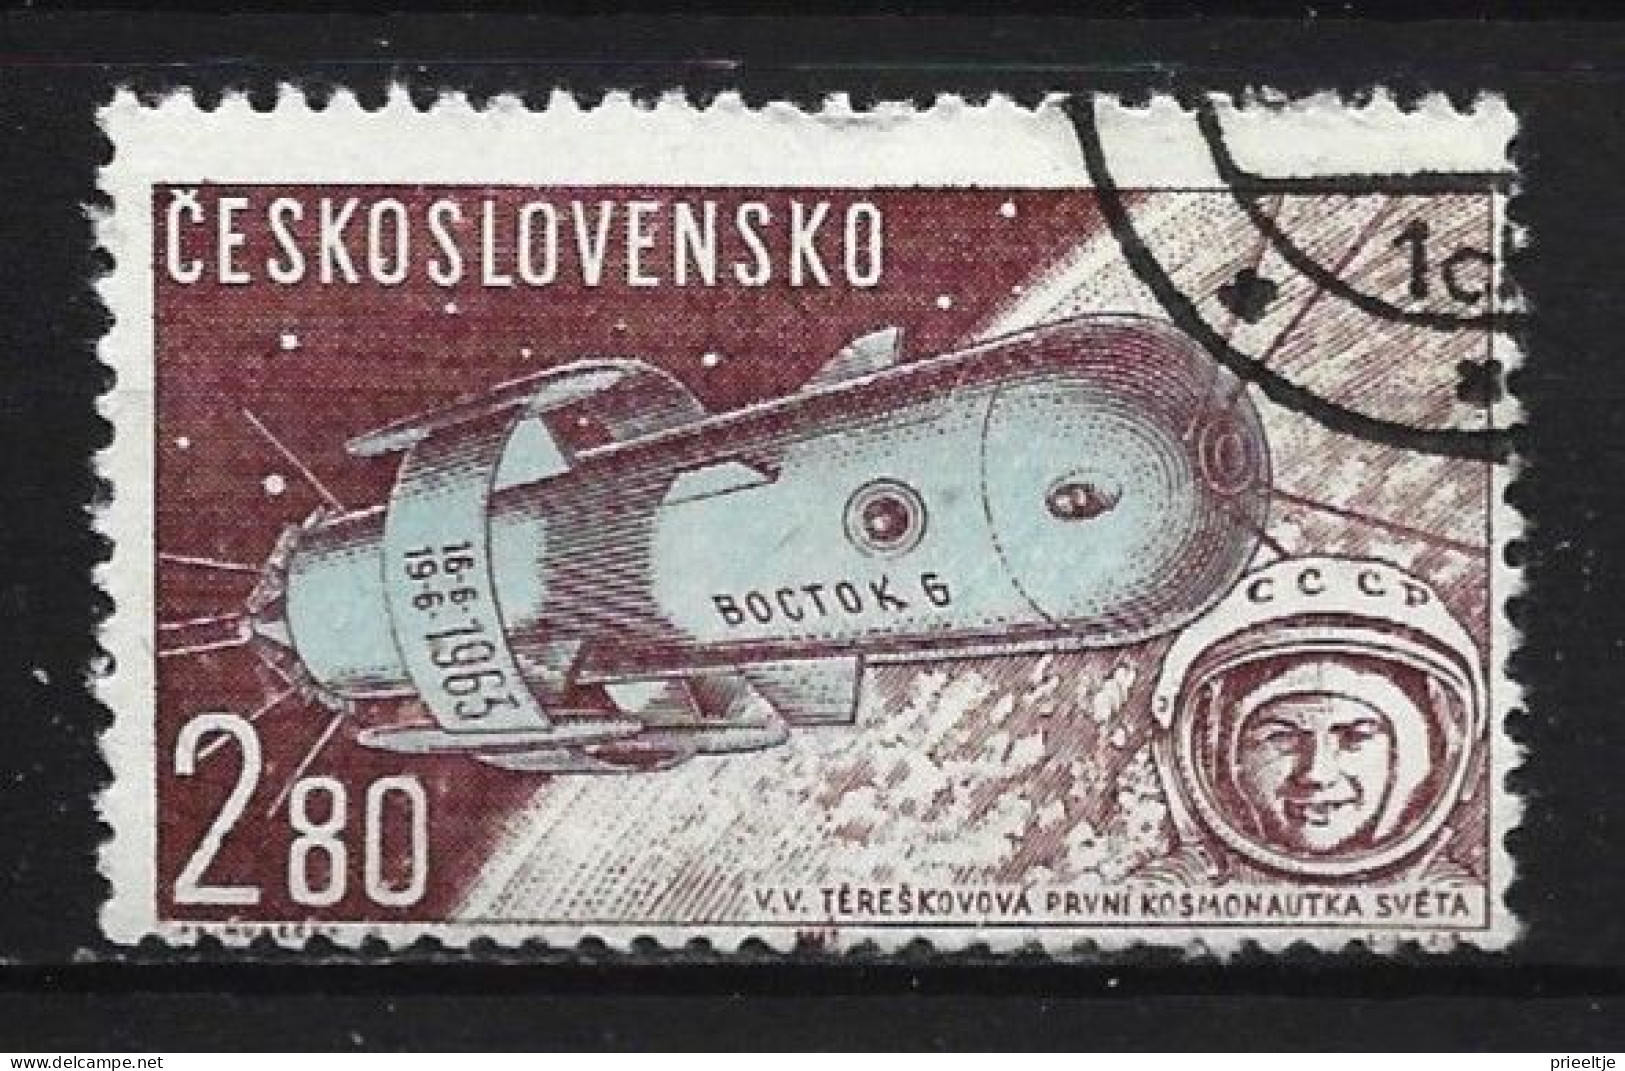 Ceskoslovensko 1963 Space Y.T. A60 (0) - Used Stamps